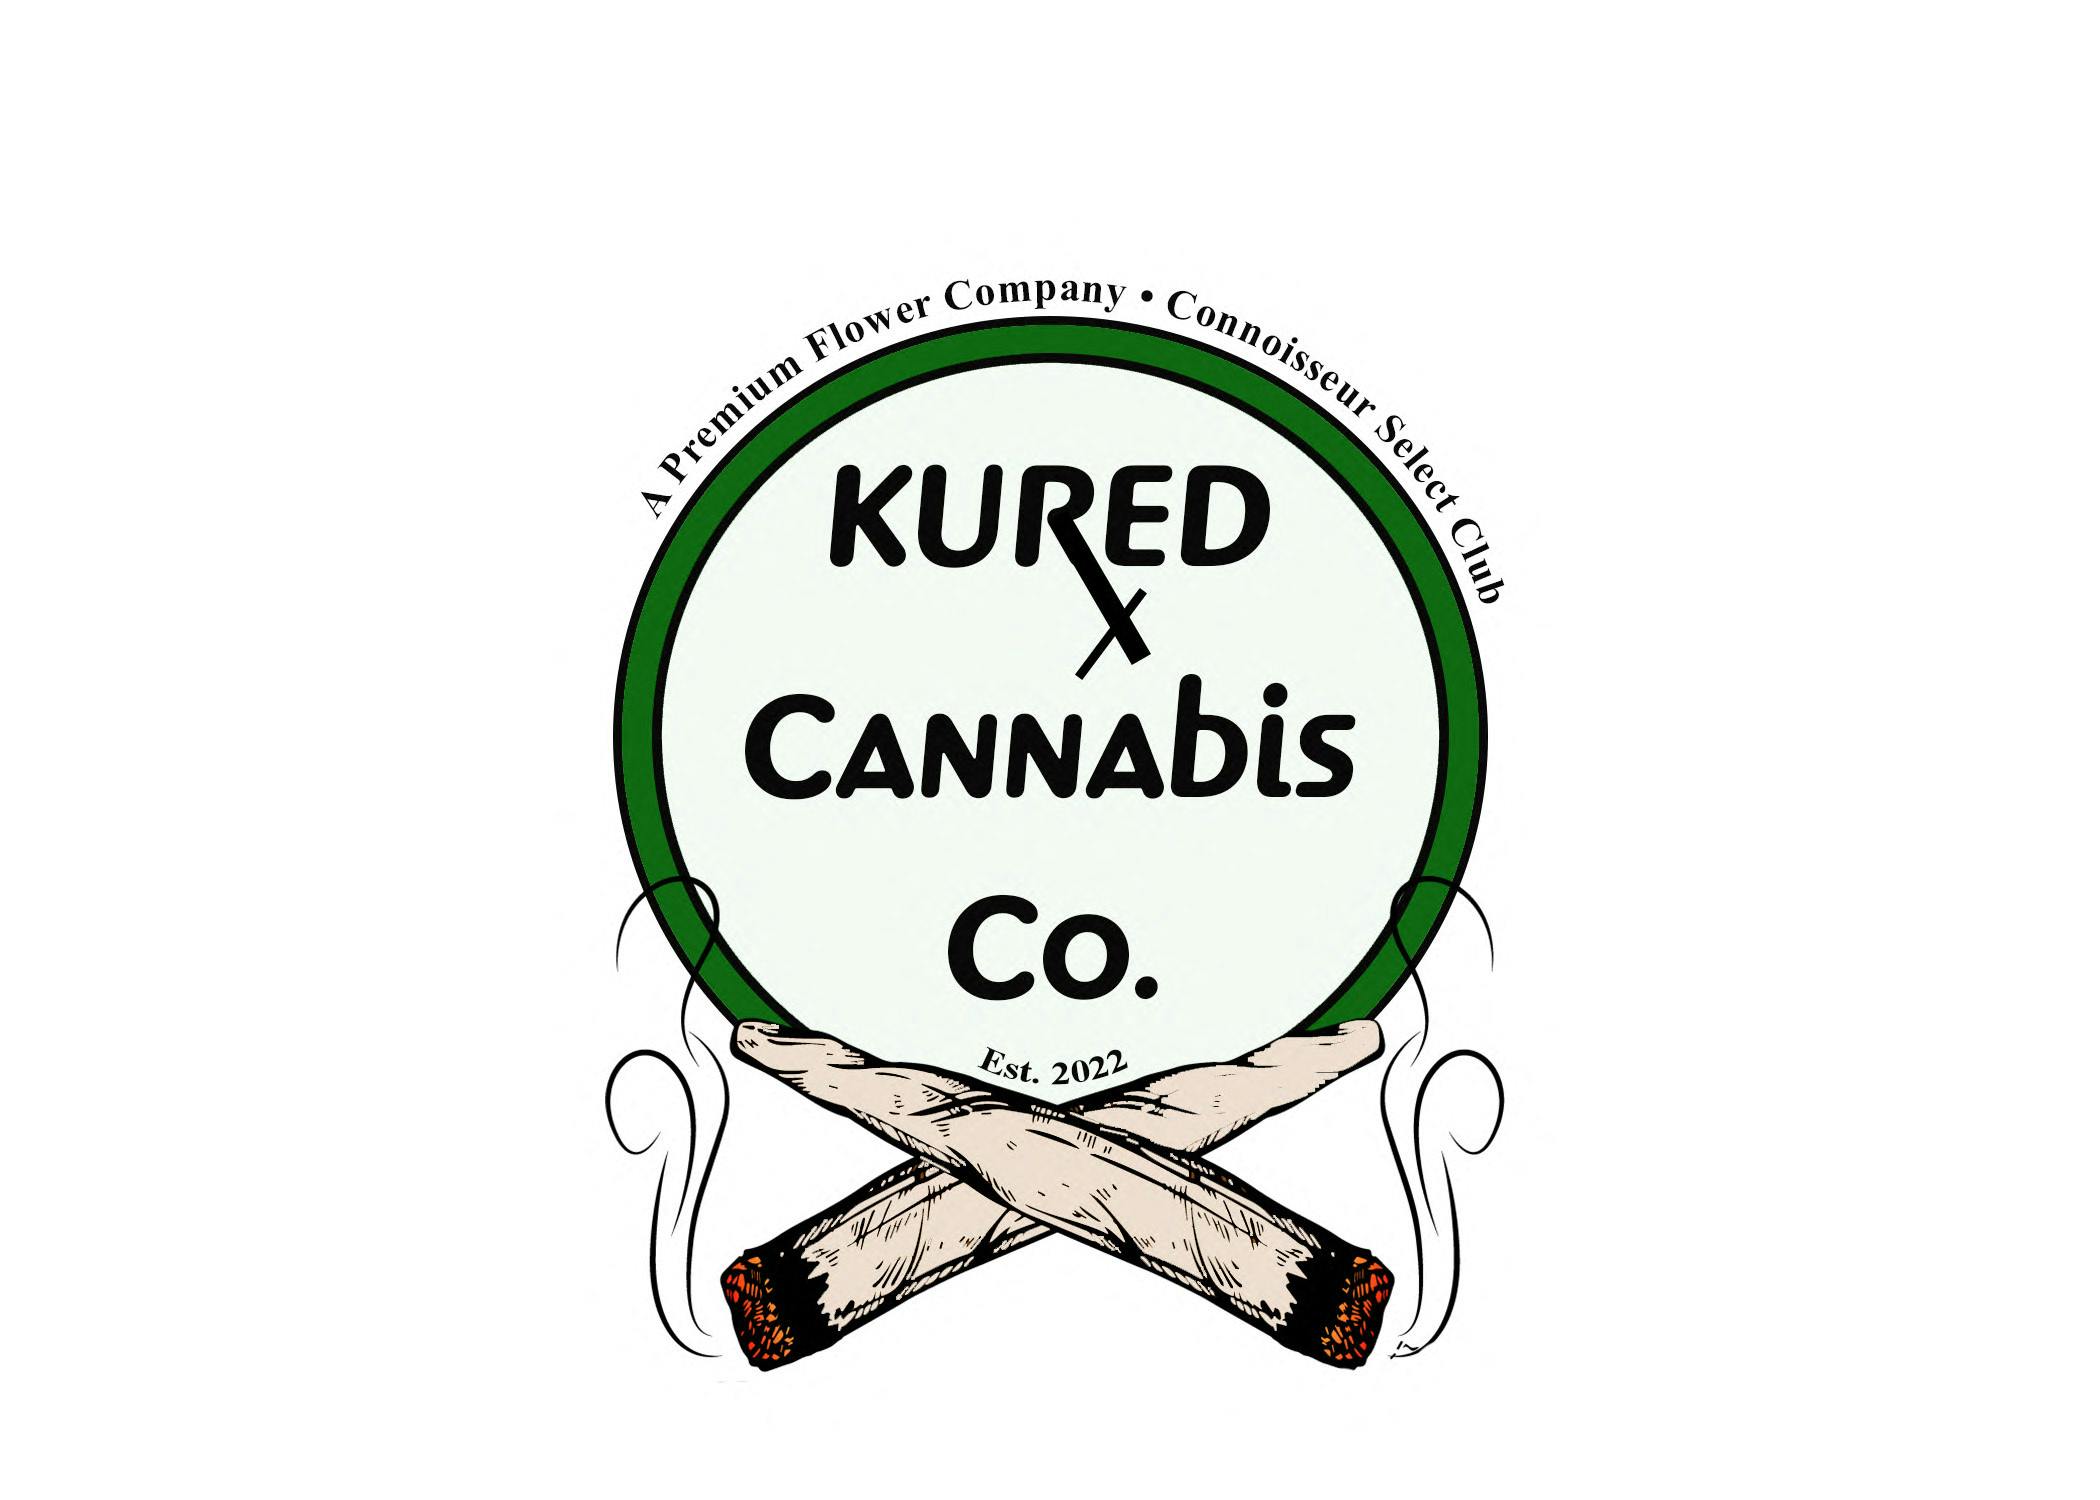 Kured Cannabis Co. logo